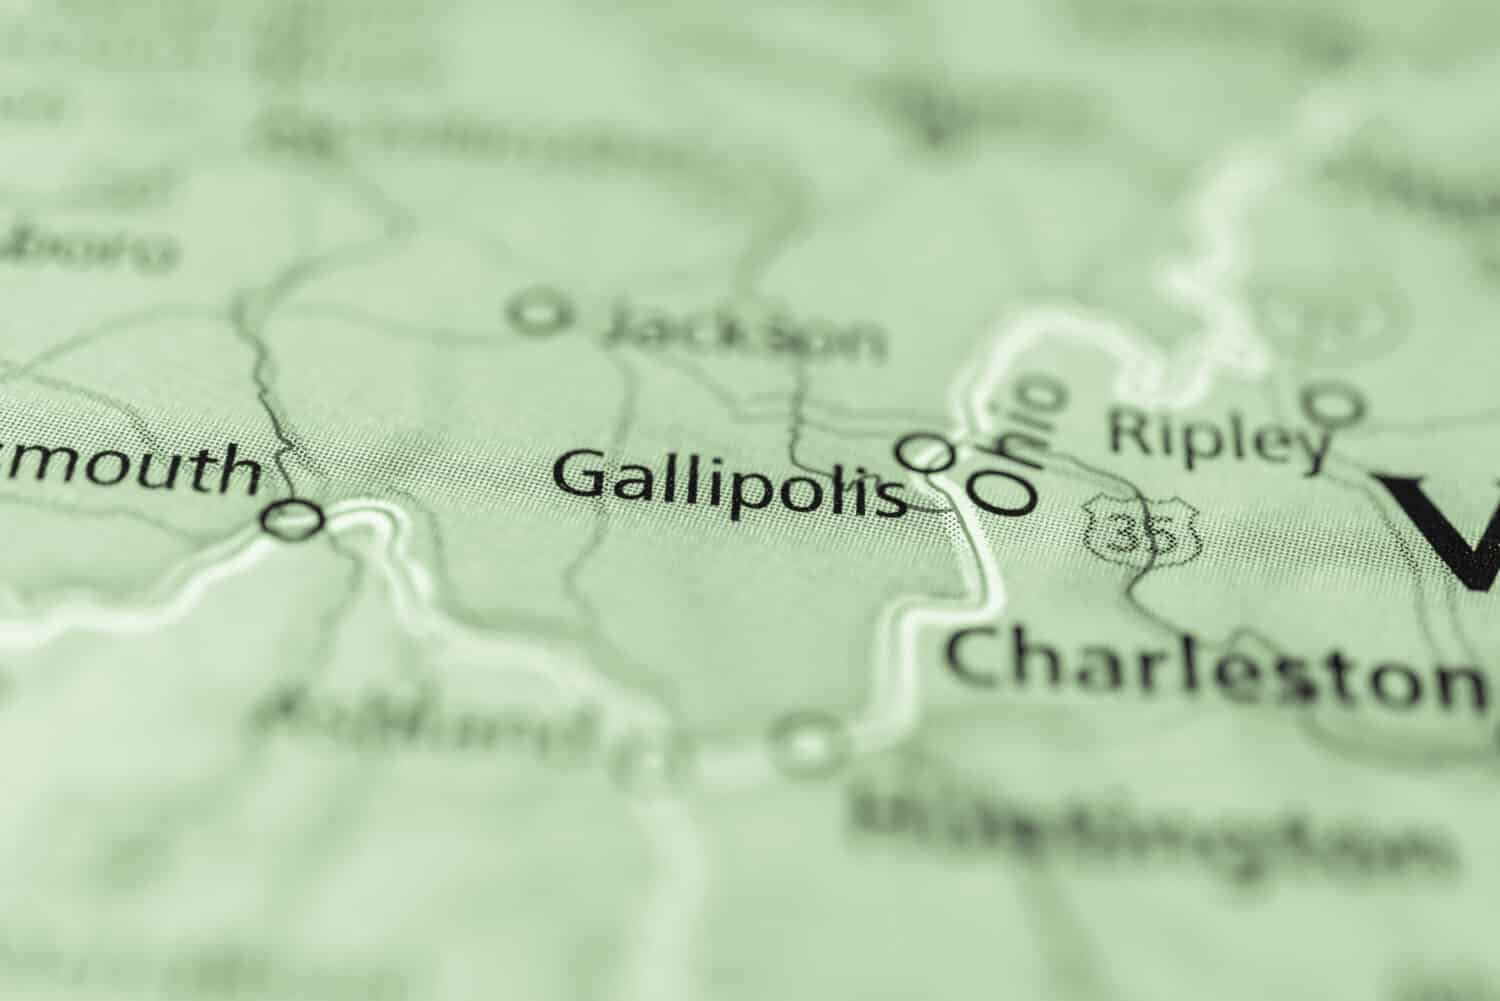 Gallipolis, Ohio, USA.